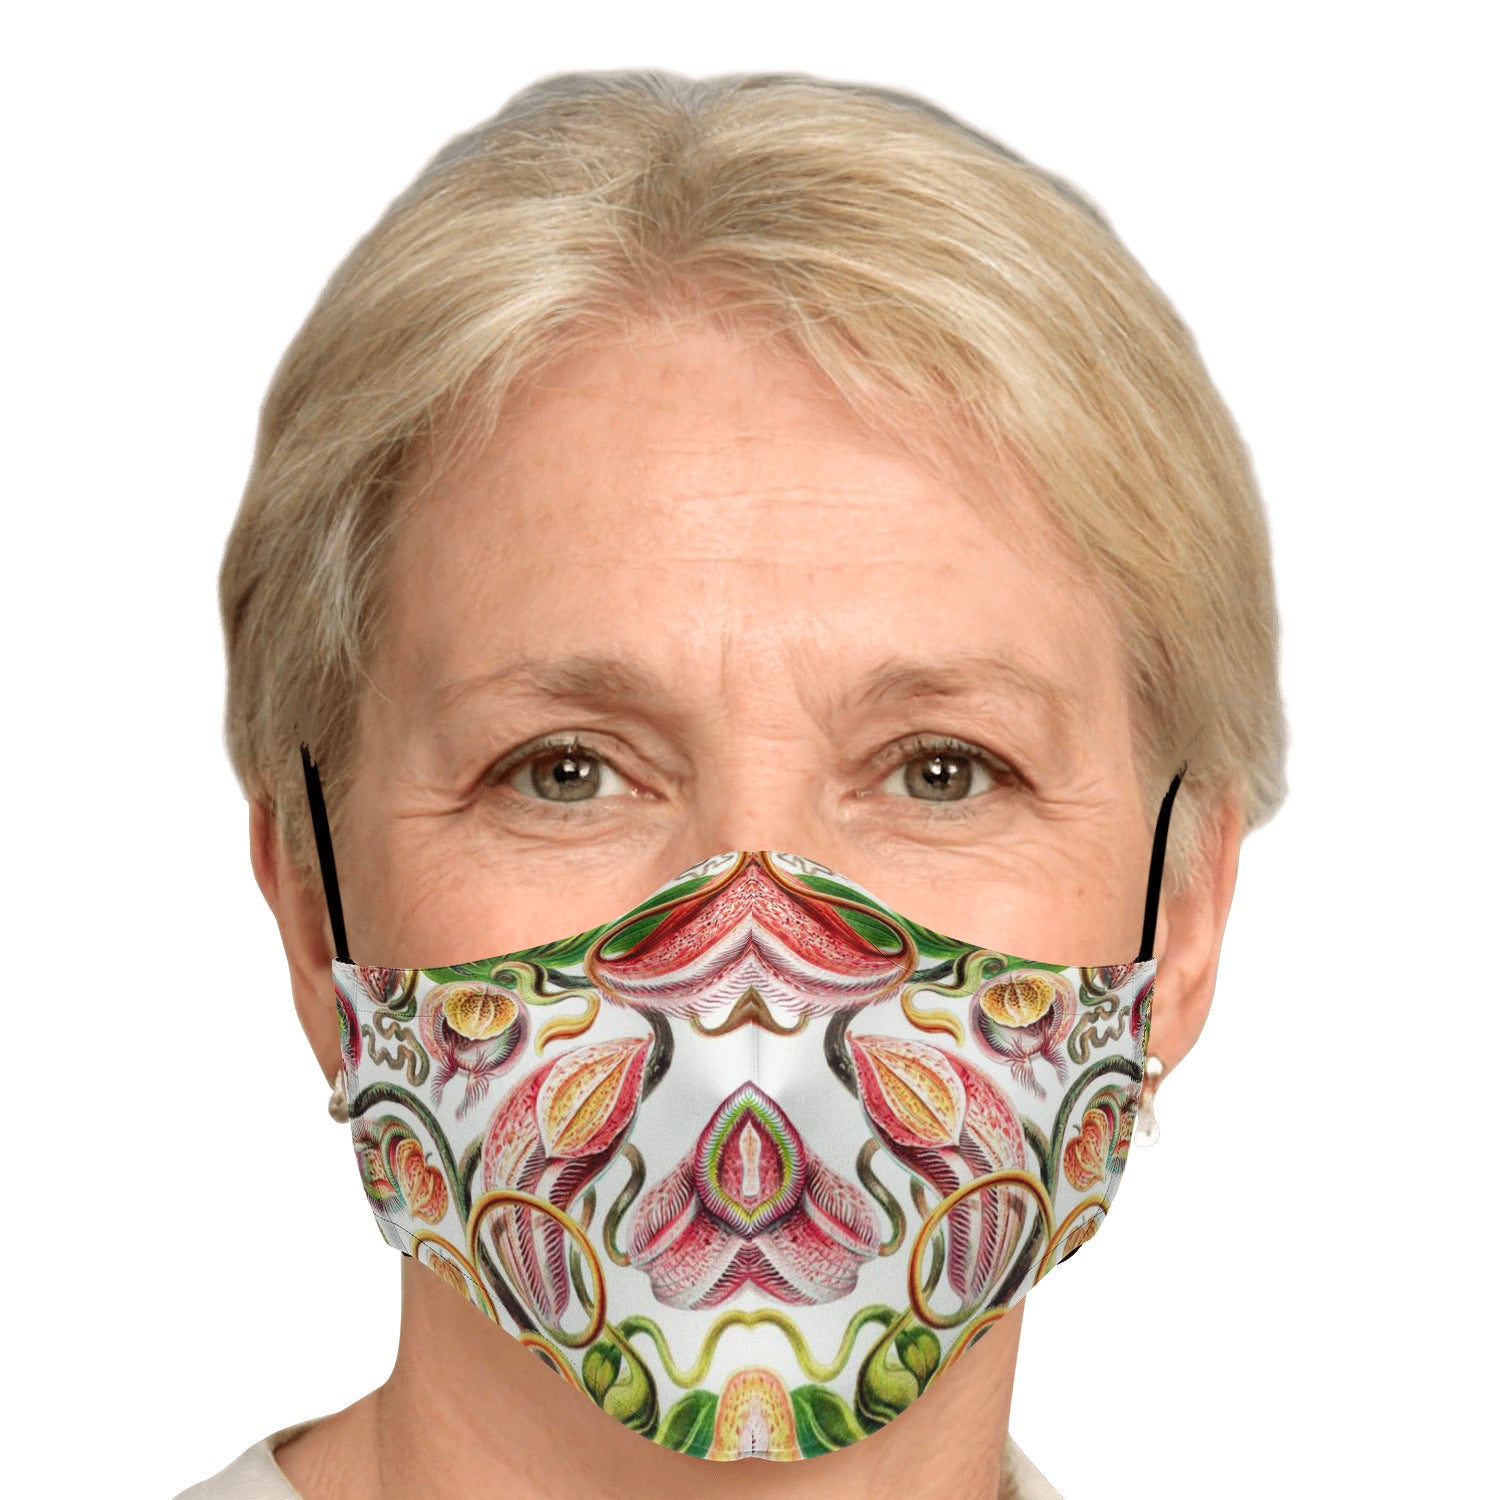 Botanical Pitcher Plant Face Masks